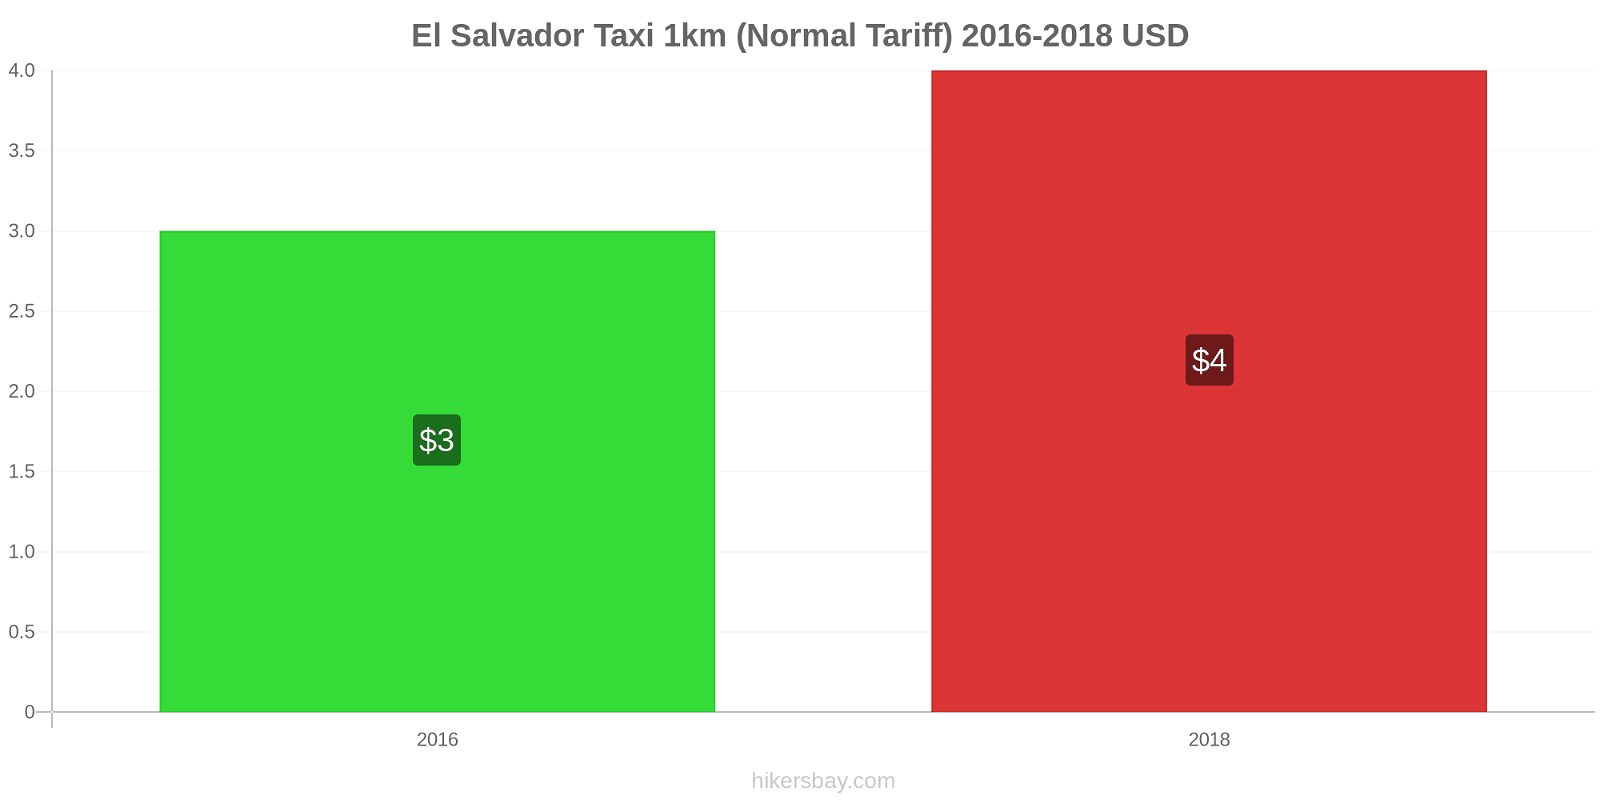 El Salvador price changes Taxi 1km (Normal Tariff) hikersbay.com